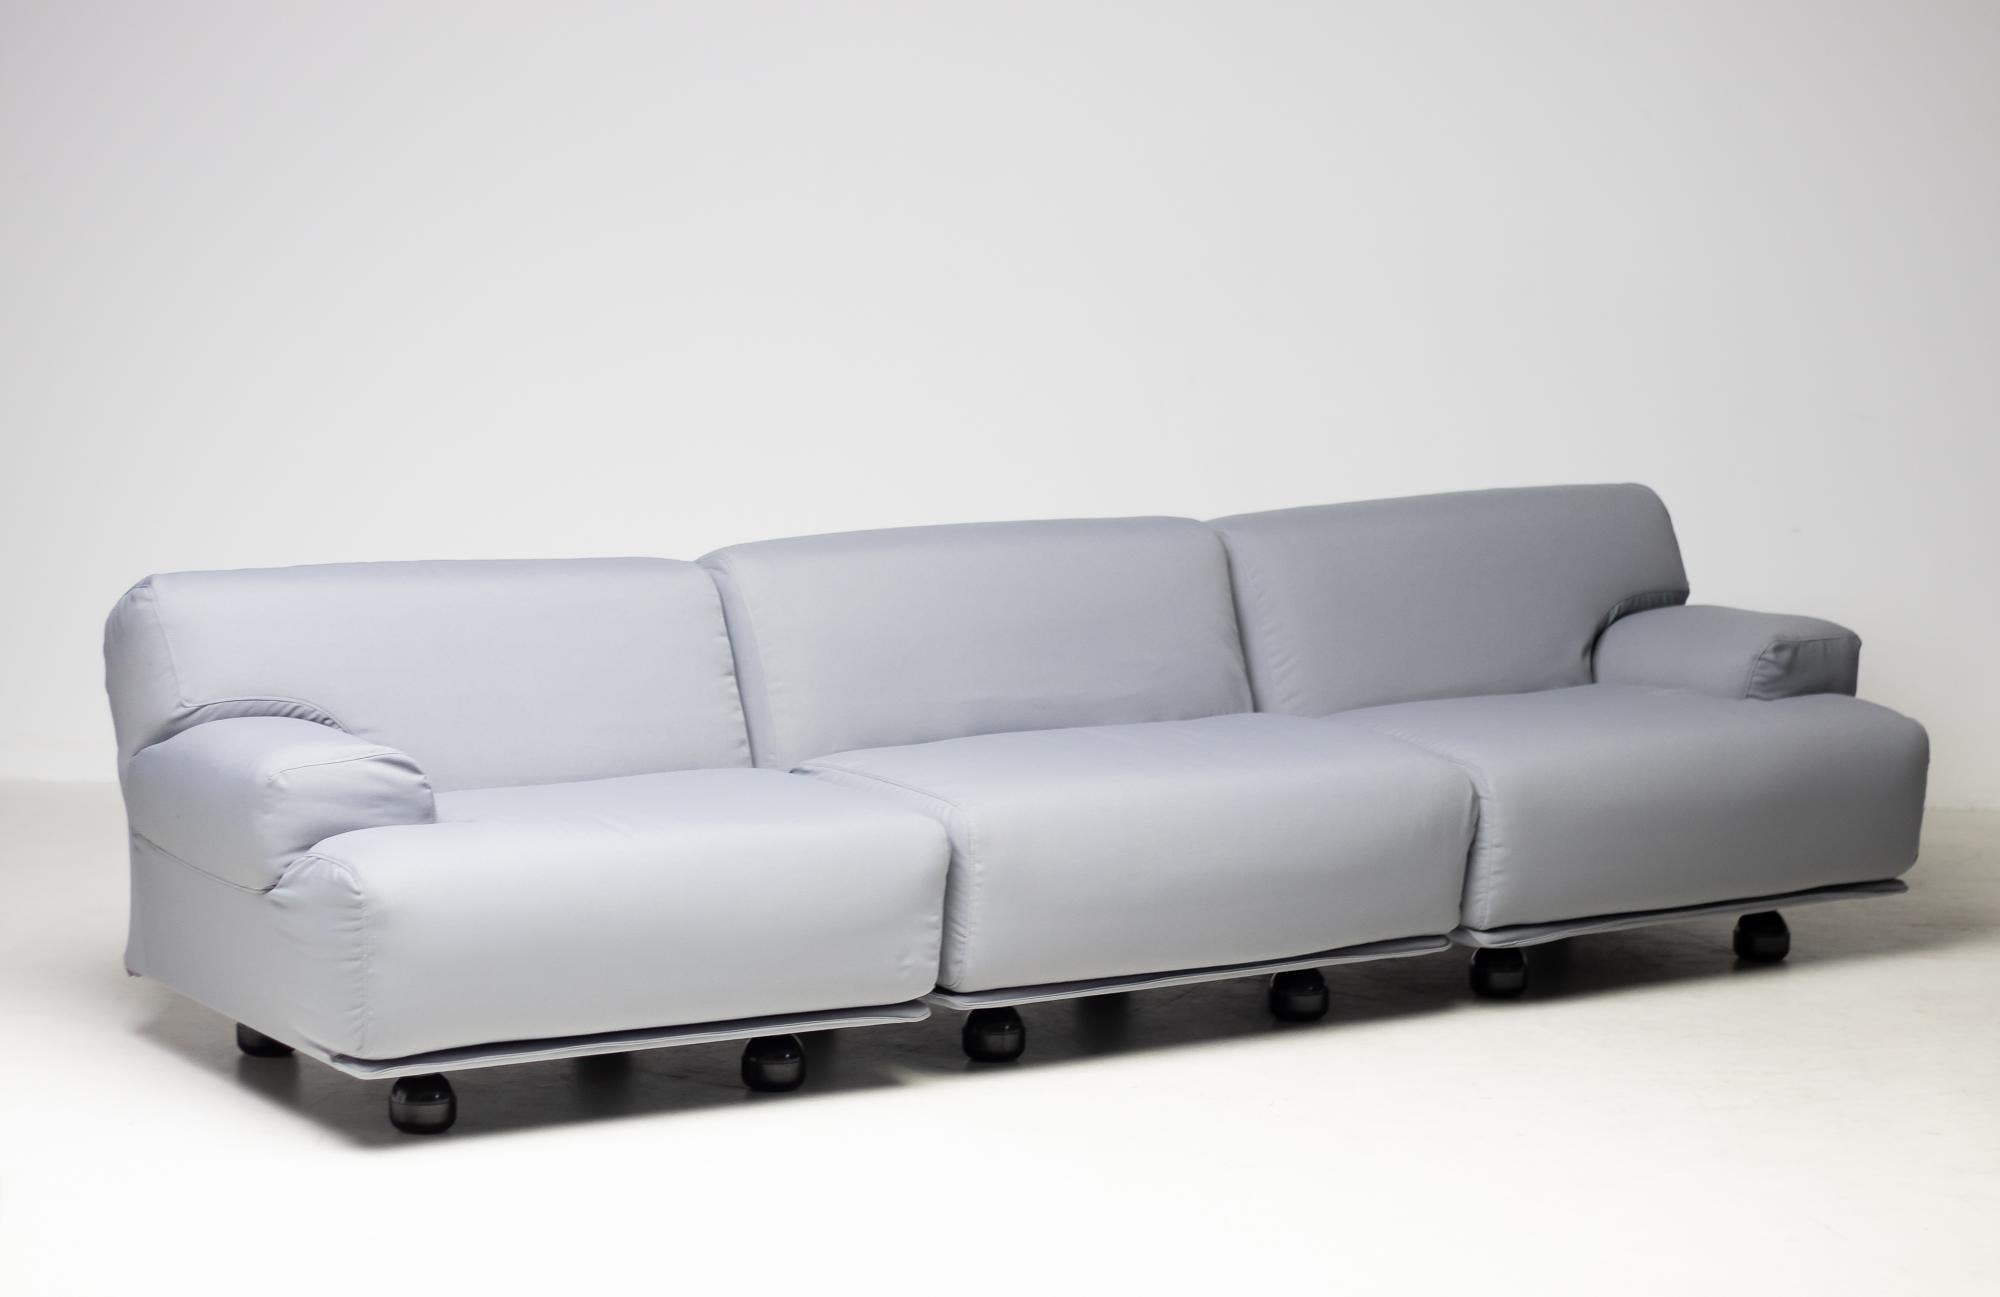 Wool Fiandra Modular Sofa by Vico Magistretti for Cassina